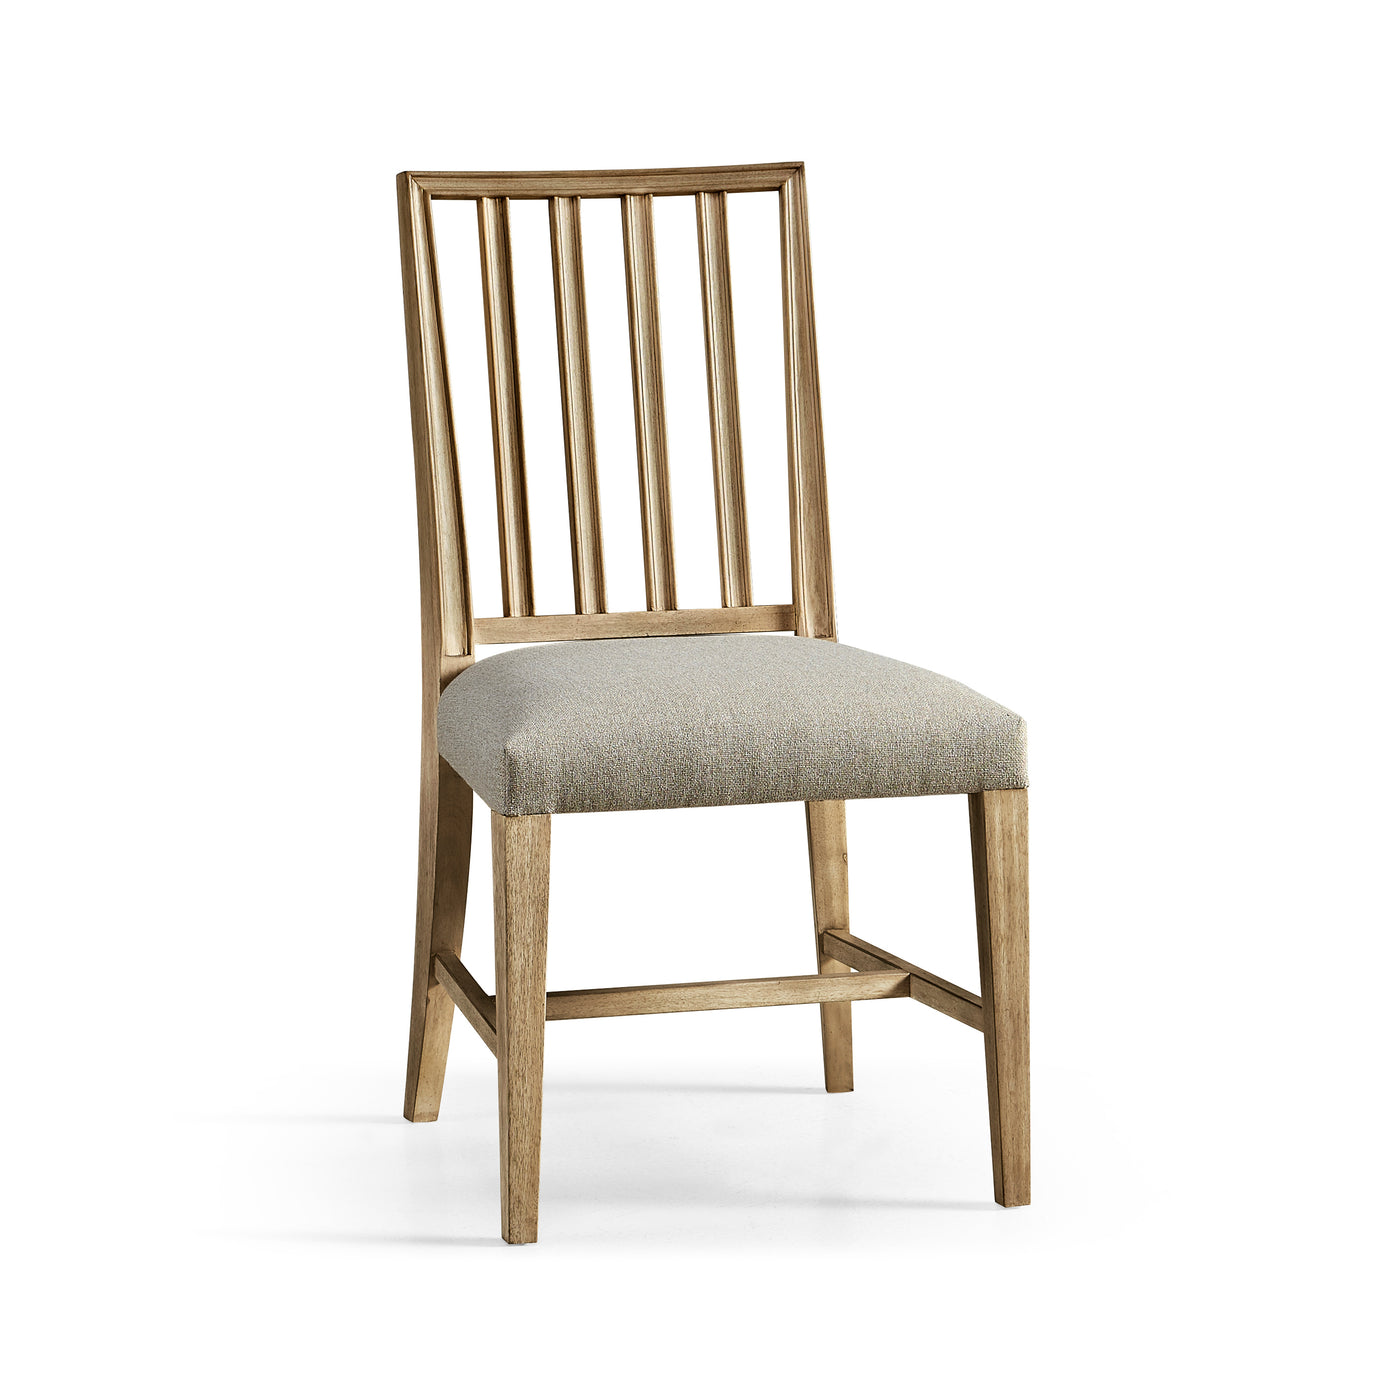 Umbra Swedish Side Chair - Stripped Brown Chestnut